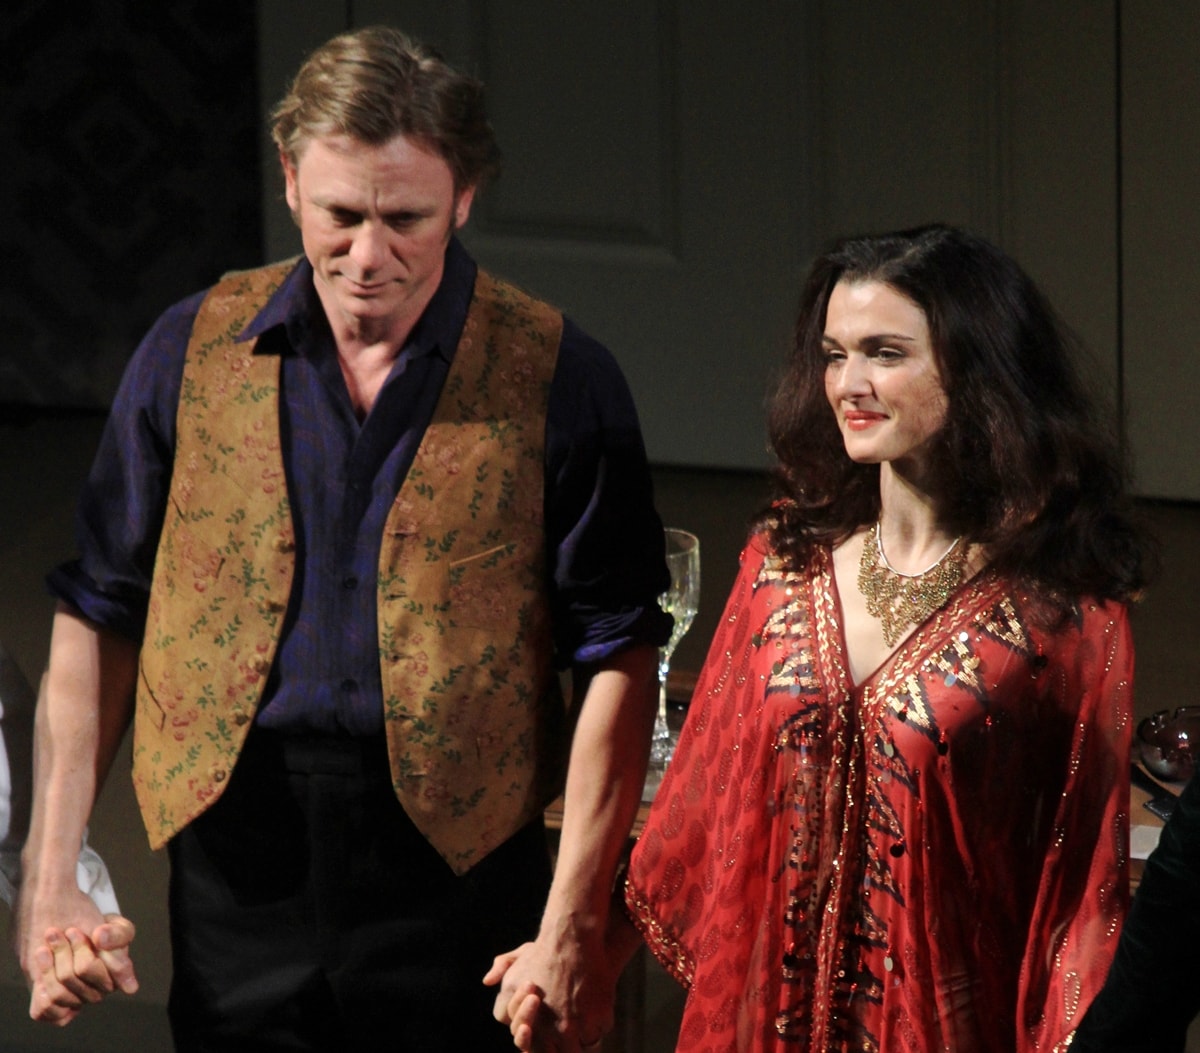 In 2013, Daniel Craig and Rachel Weisz starred in a Broadway revival of Harold Pinter's Betrayal